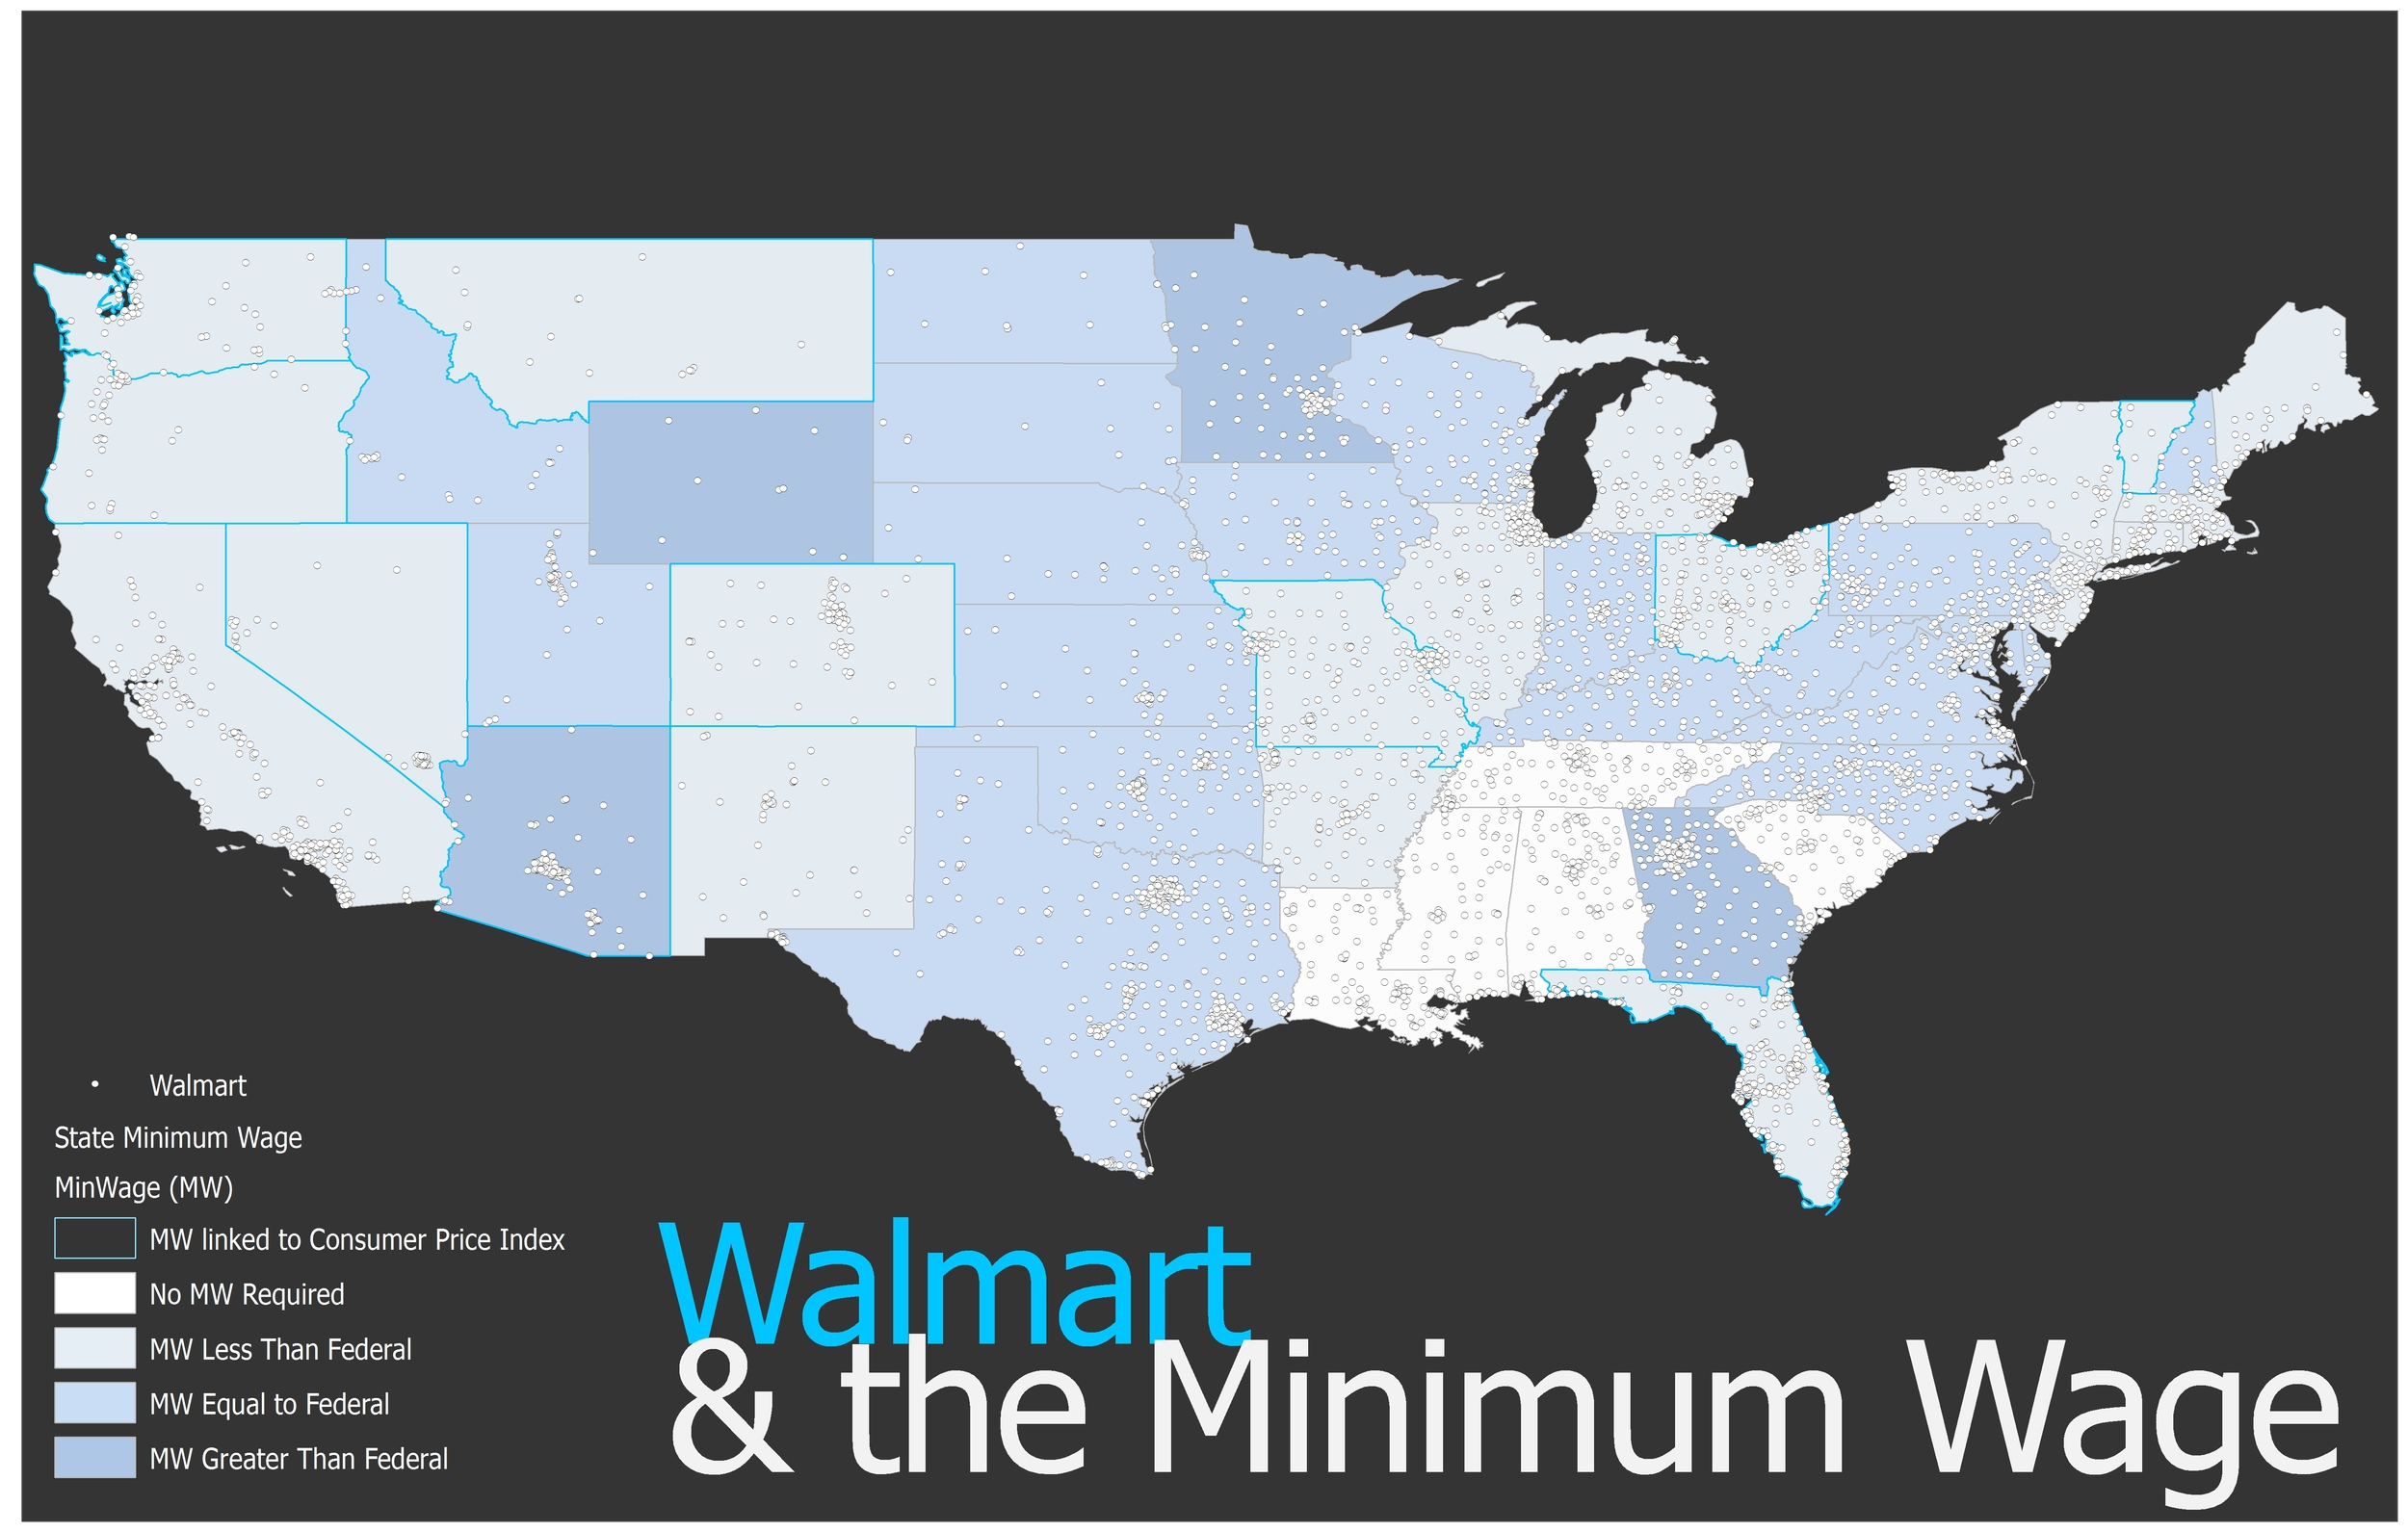 Walmart & the Minimum Wage